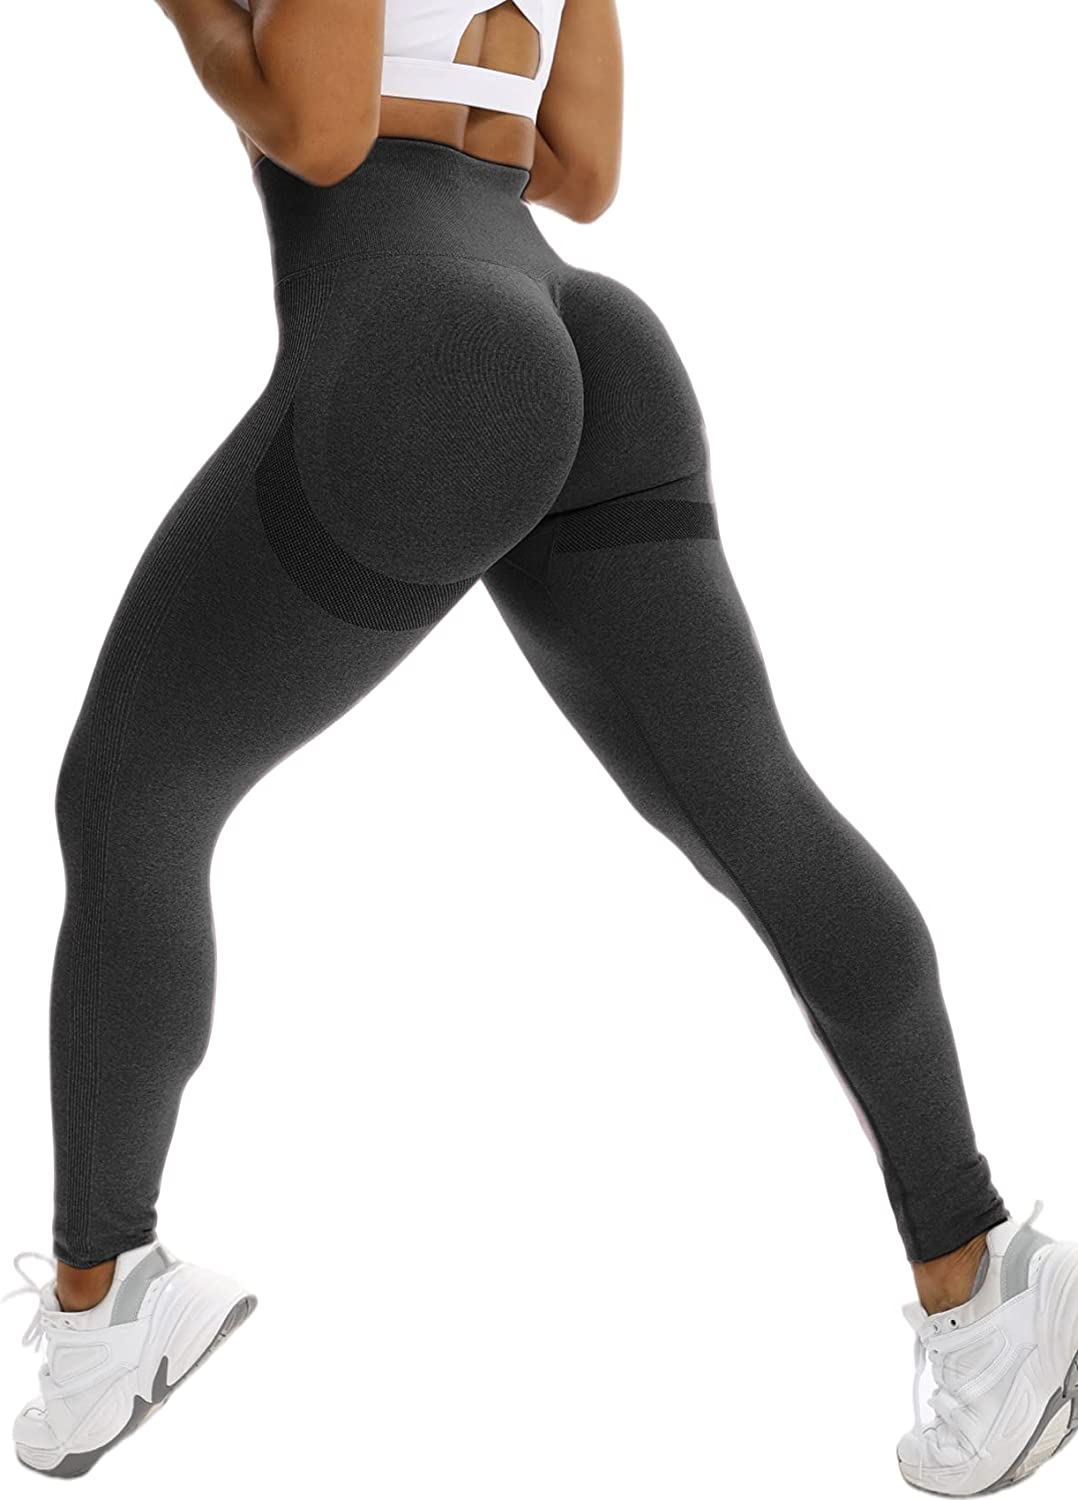 SEASUM Women's Boot-Cut Yoga Pants Bootleg Casual Workout Pants